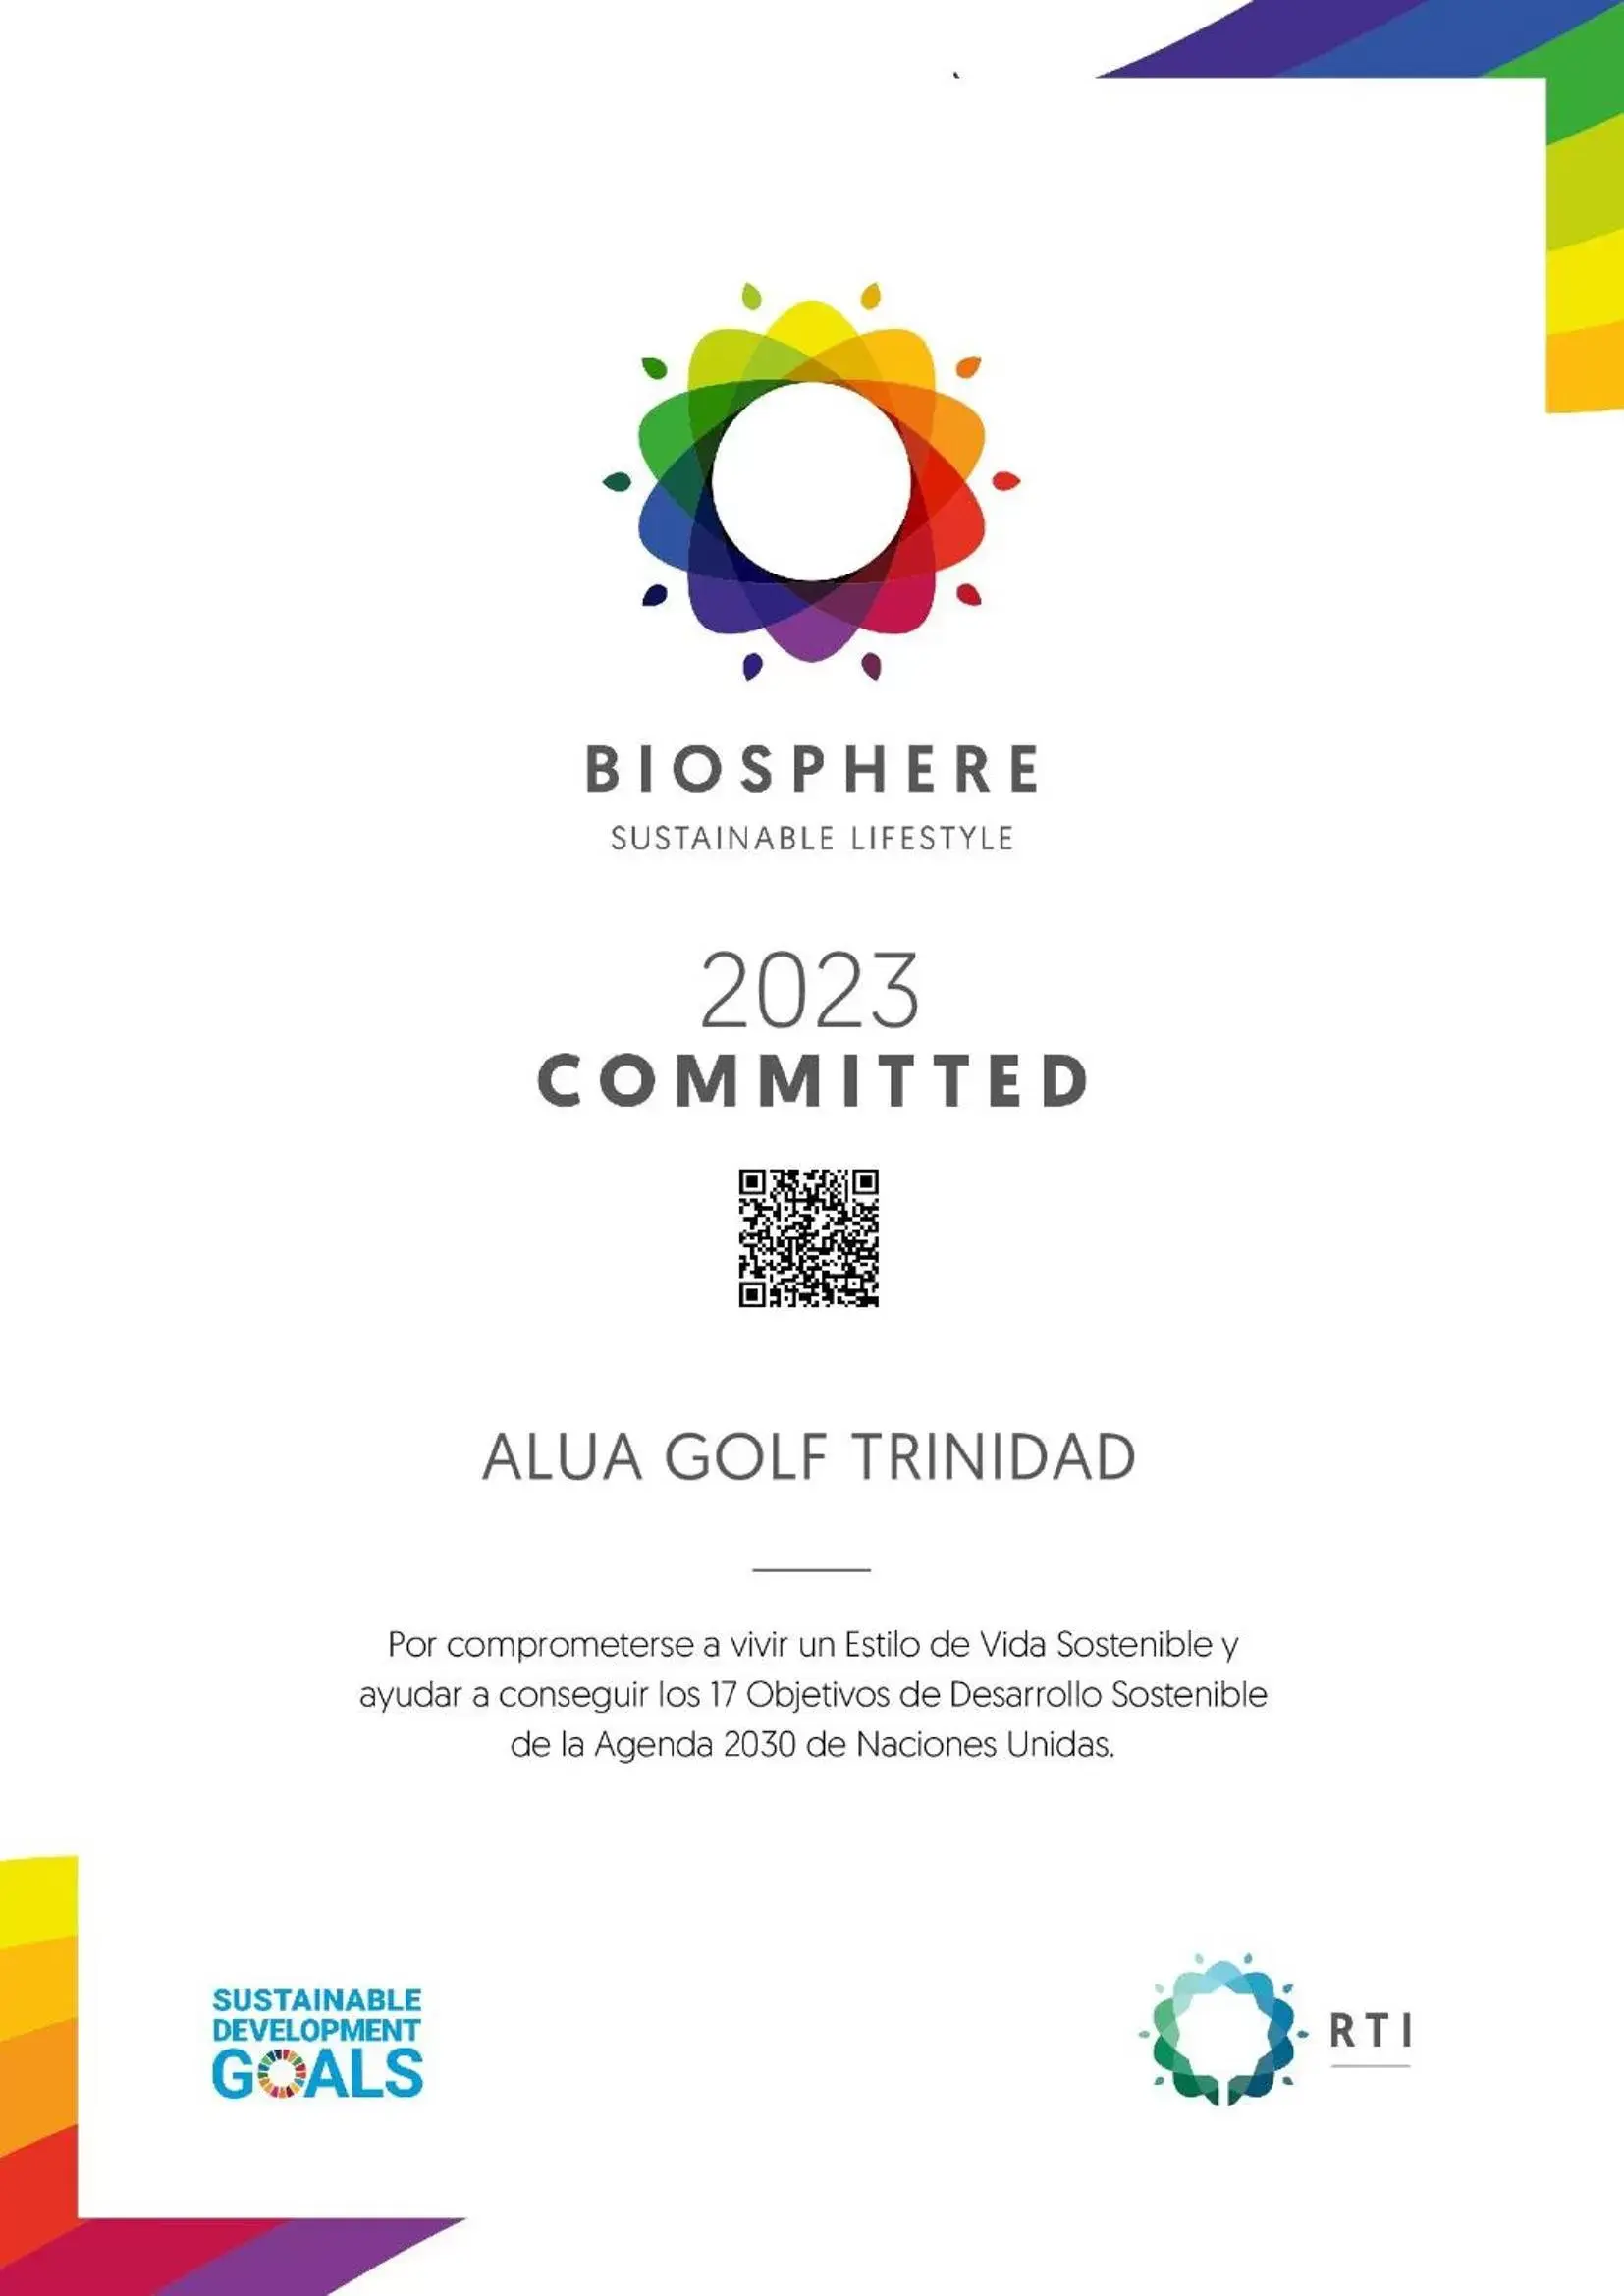 Certificate/Award in Alua Golf Trinidad